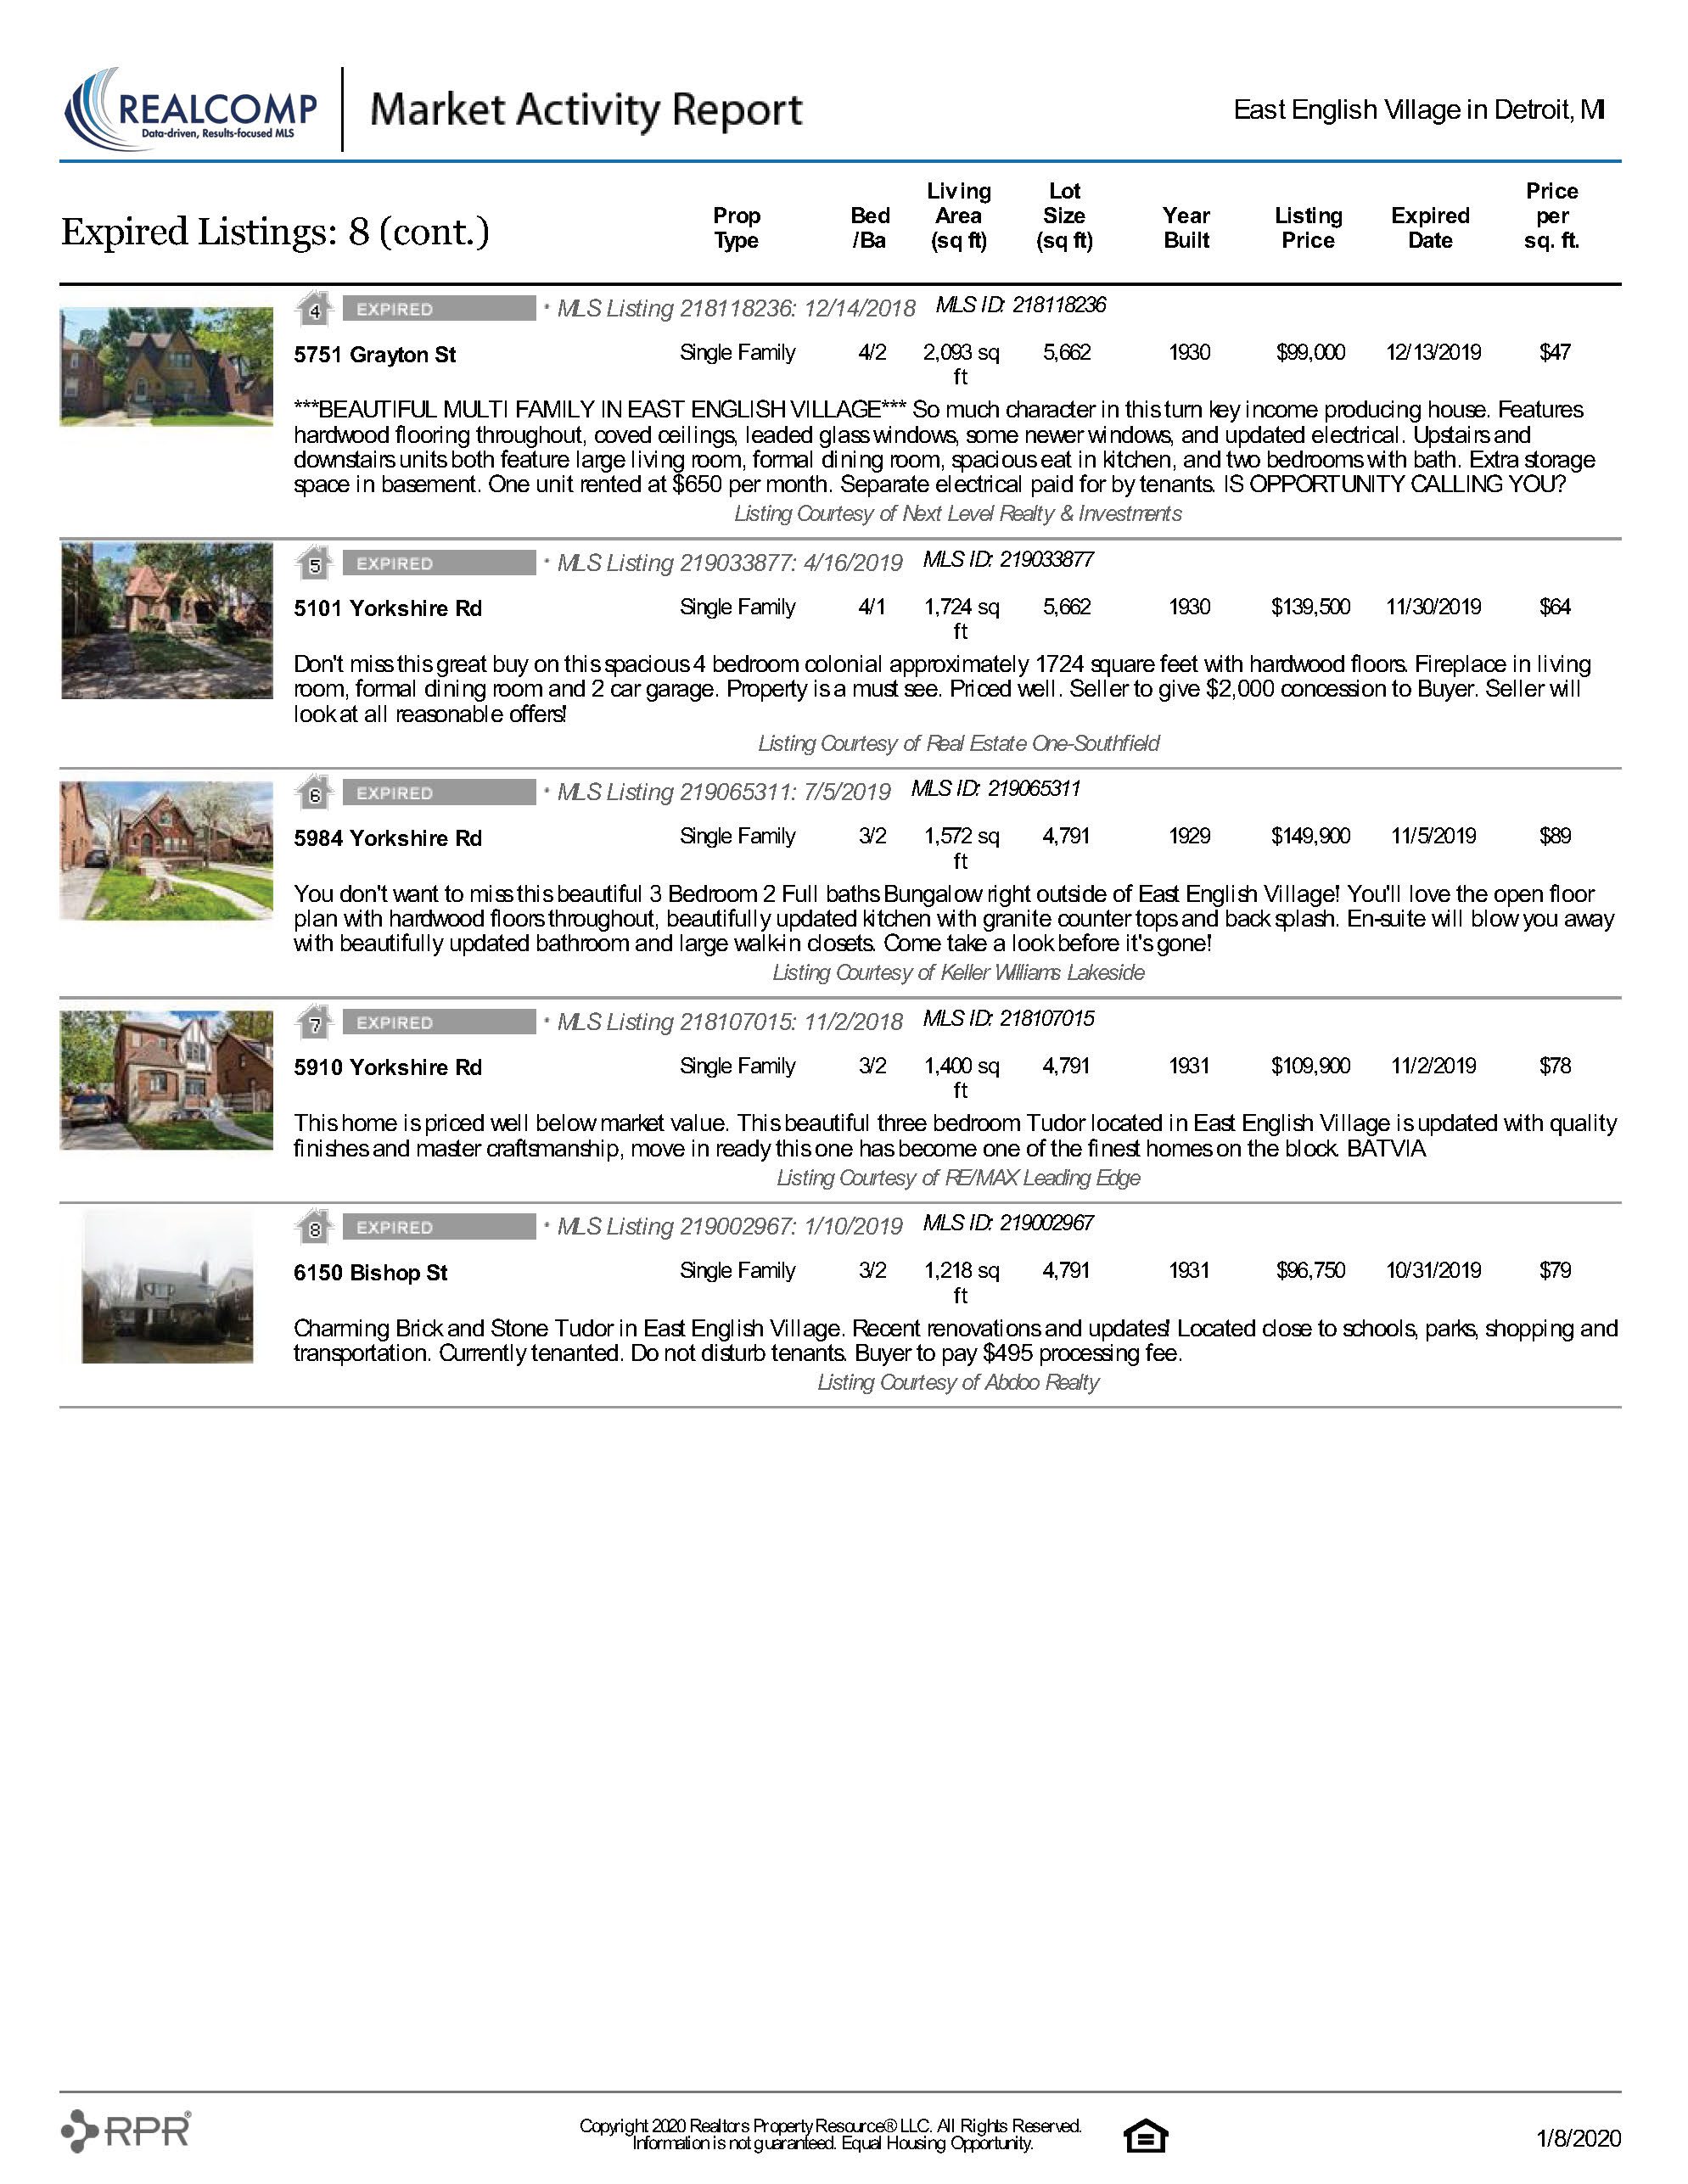 Market-Activity-Report_East-English-Village-in-Detroit-MI_2020-01-08-18-38-24_Page_20.jpg